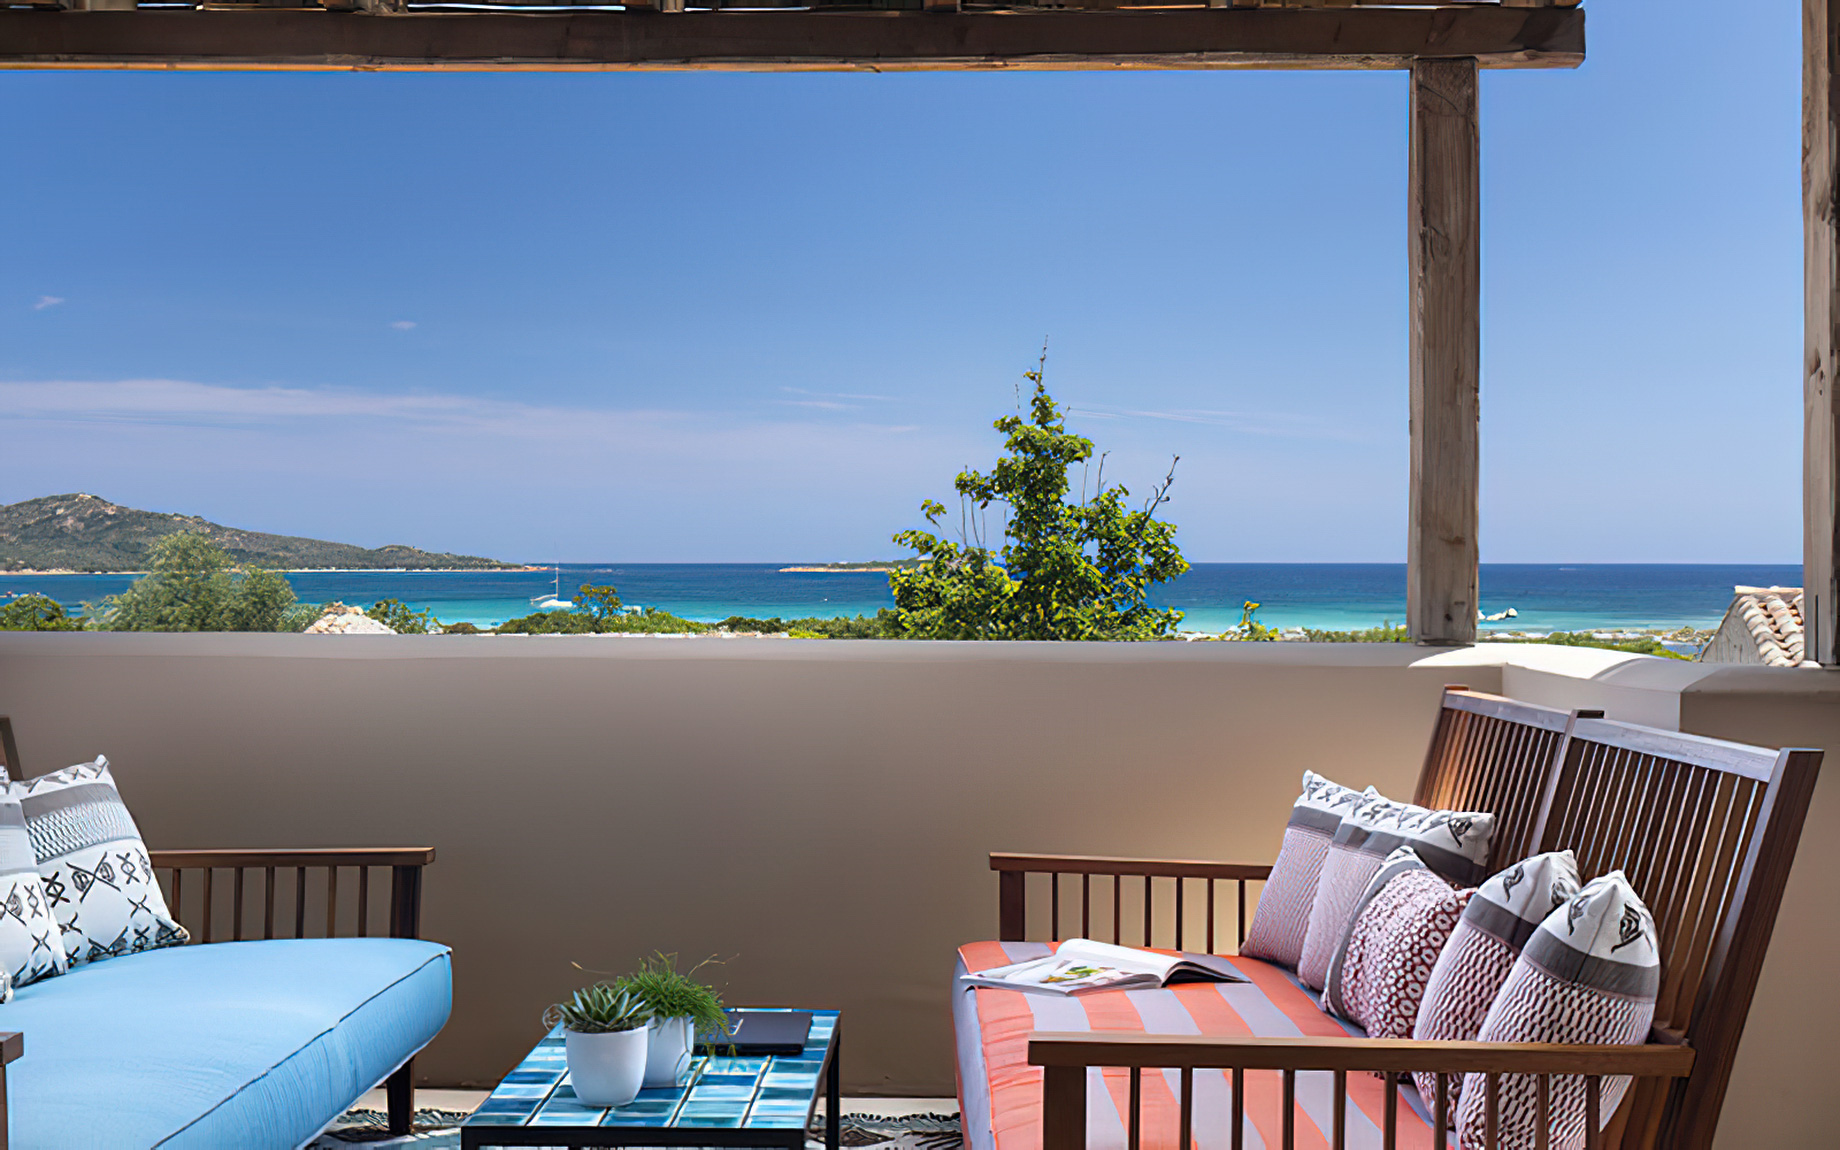 Baglioni Resort Sardinia – San Teodoro, Sardegna, Italy – Maddalena Suite Terrace Sea View